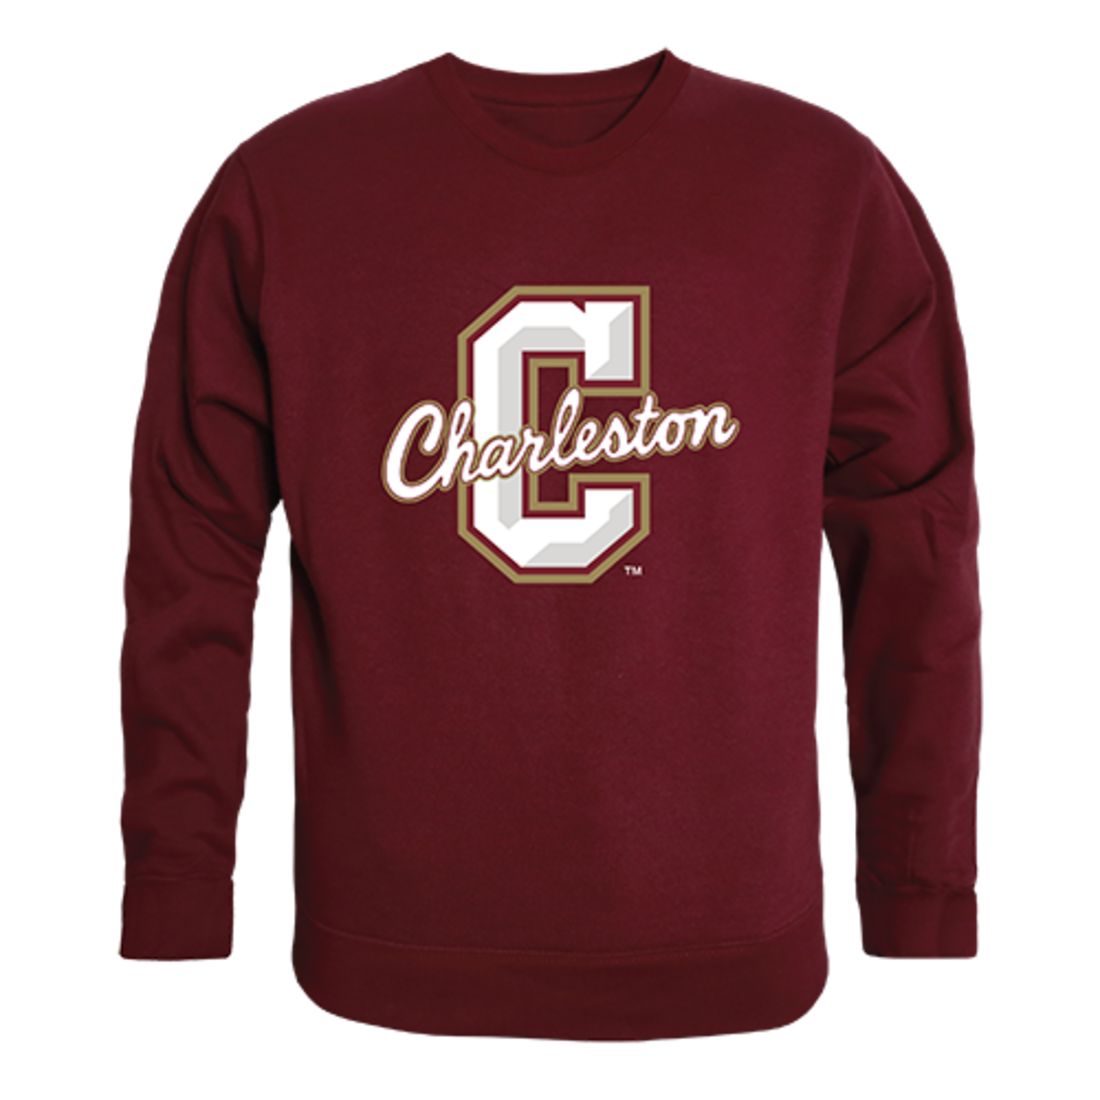 CMU Central Michigan University Chippewas Crewneck Pullover Sweatshirt Sweater Maroon-Campus-Wardrobe